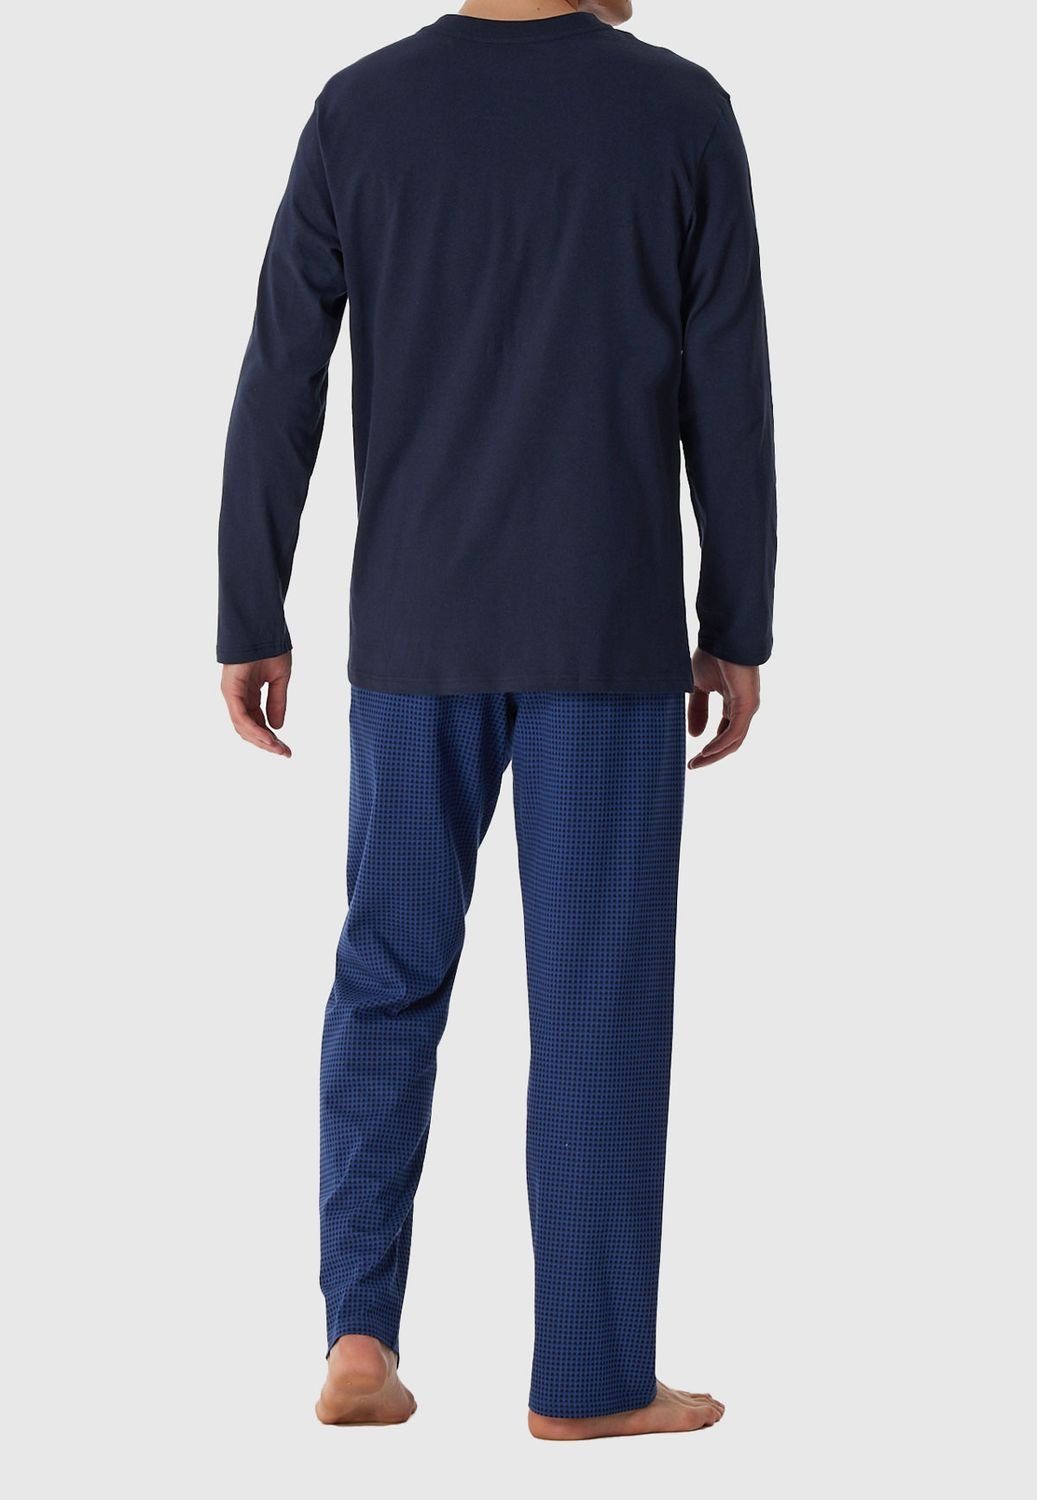 Pyjama Stück Hahnentritt selected! tlg) 1 blau 2 premium V-Ausschnitt, navy / Schiesser inspiration Unterteil lang, (Set,